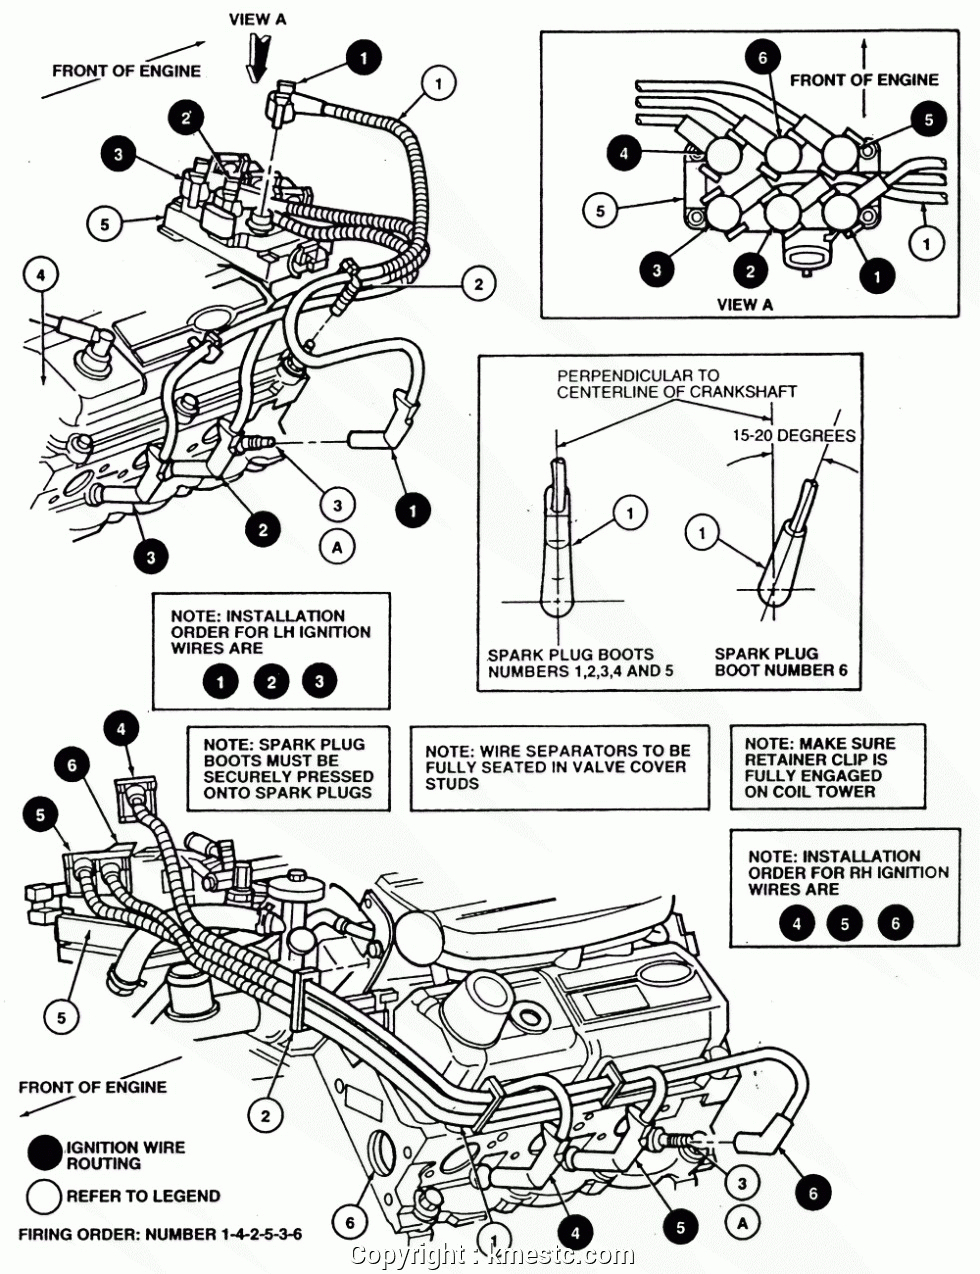 1999 Ford Mustang Spark Plug Diagram | Manual E-Books - 2001 Ford Mustang Spark Plug Wiring Diagram